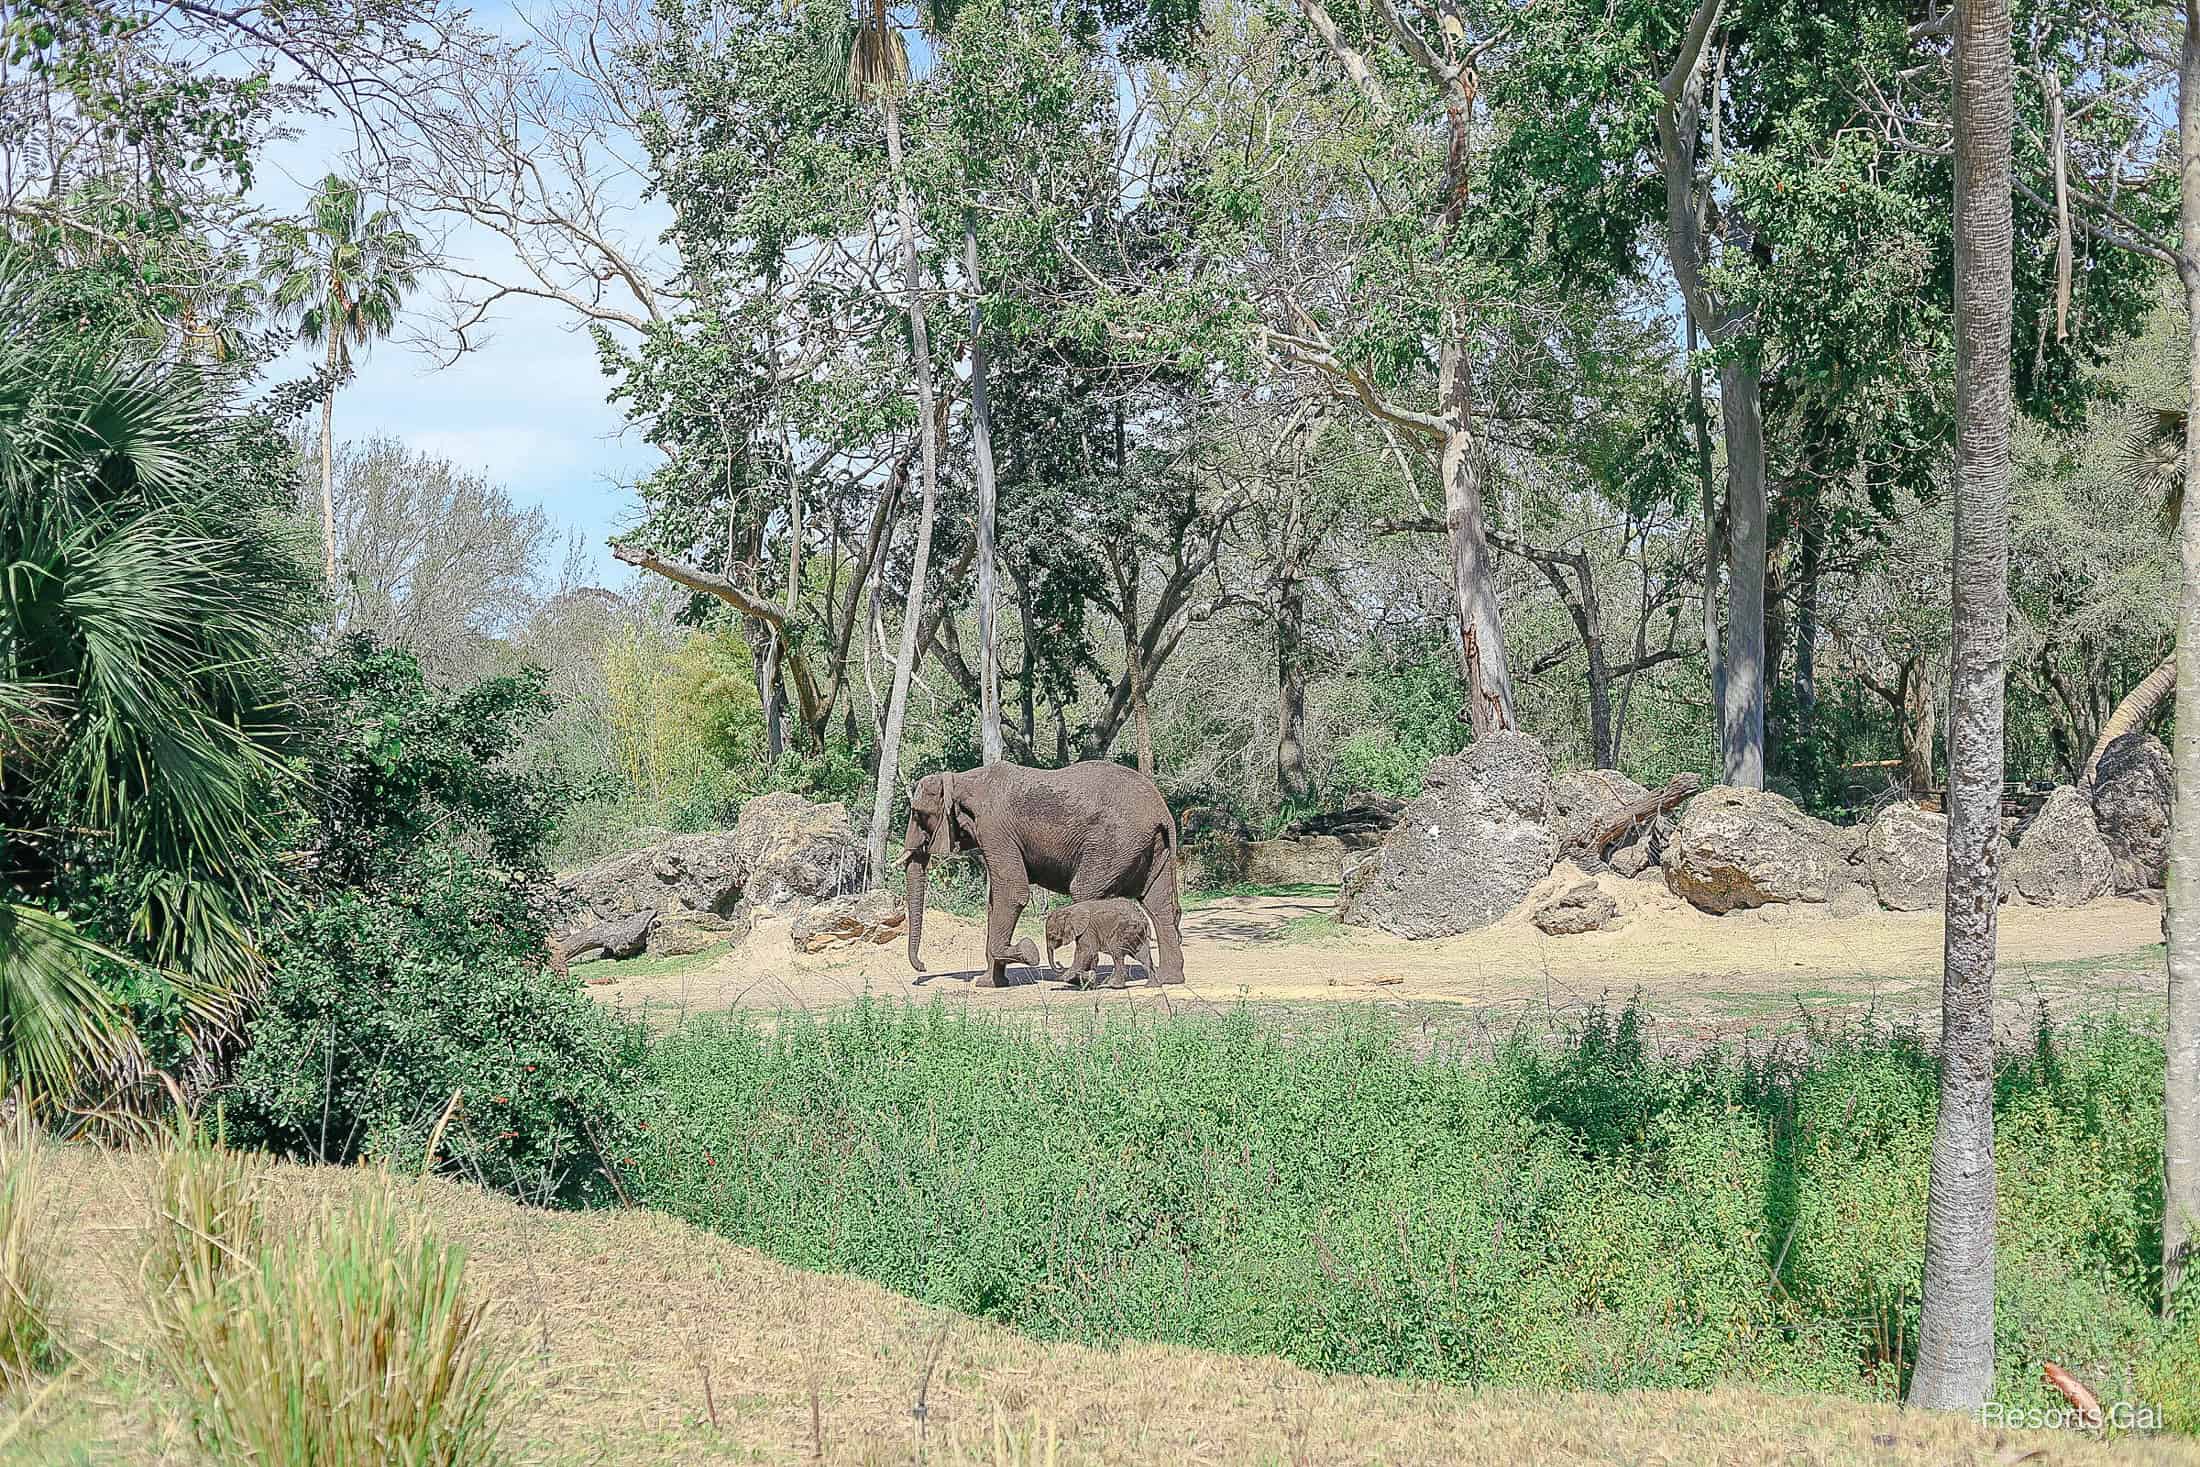 animal kingdom safari photos